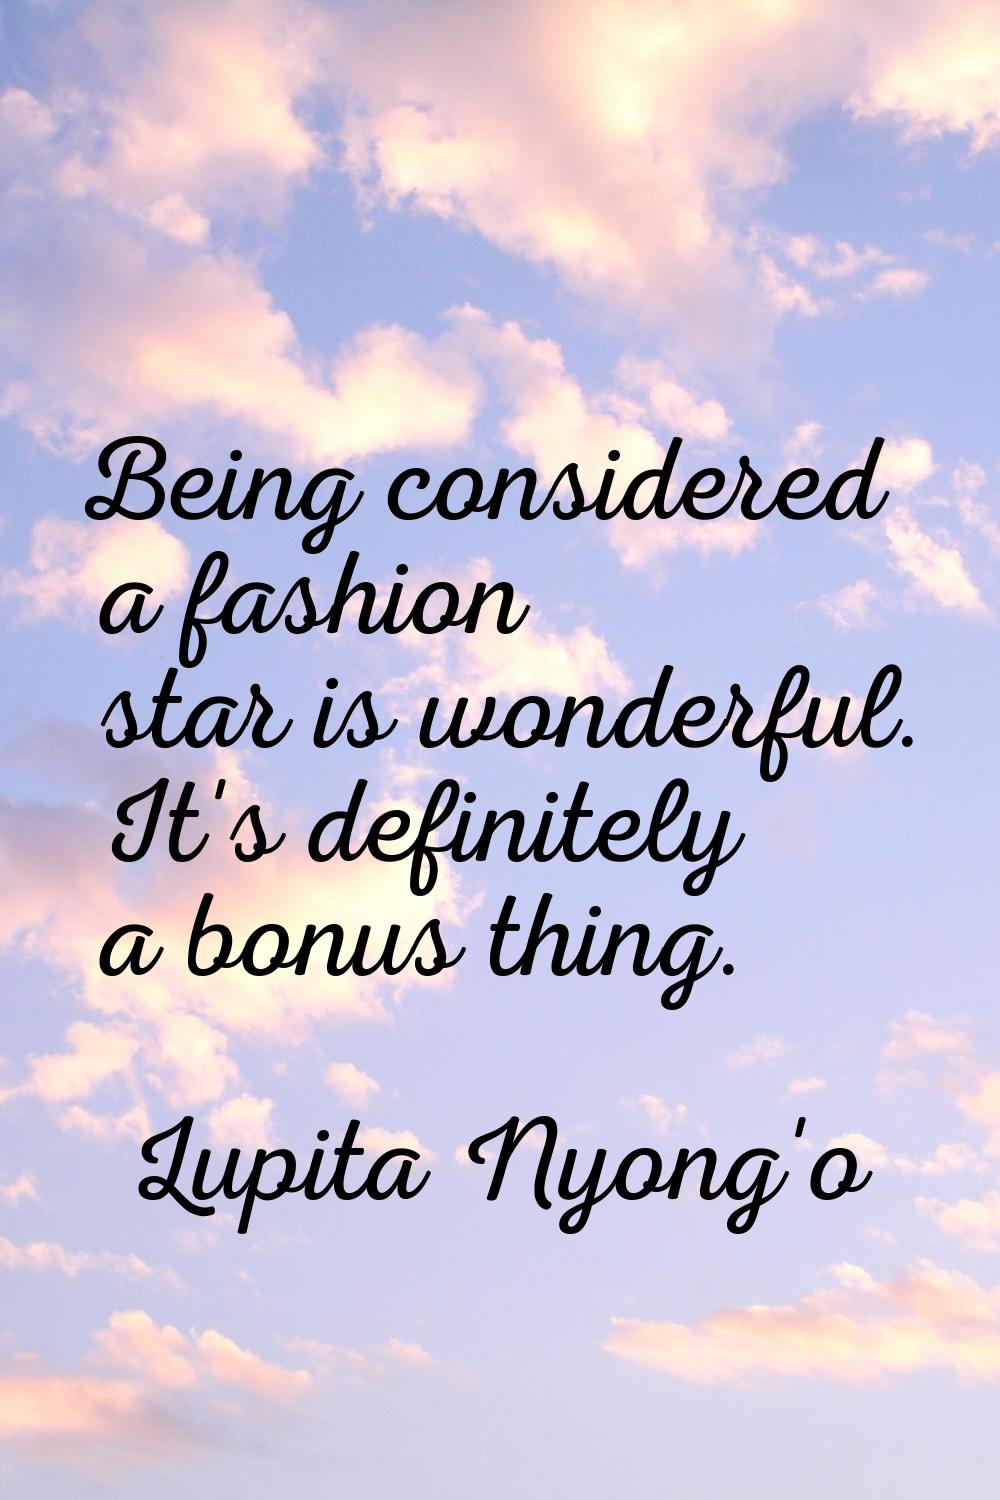 Being considered a fashion star is wonderful. It's definitely a bonus thing.